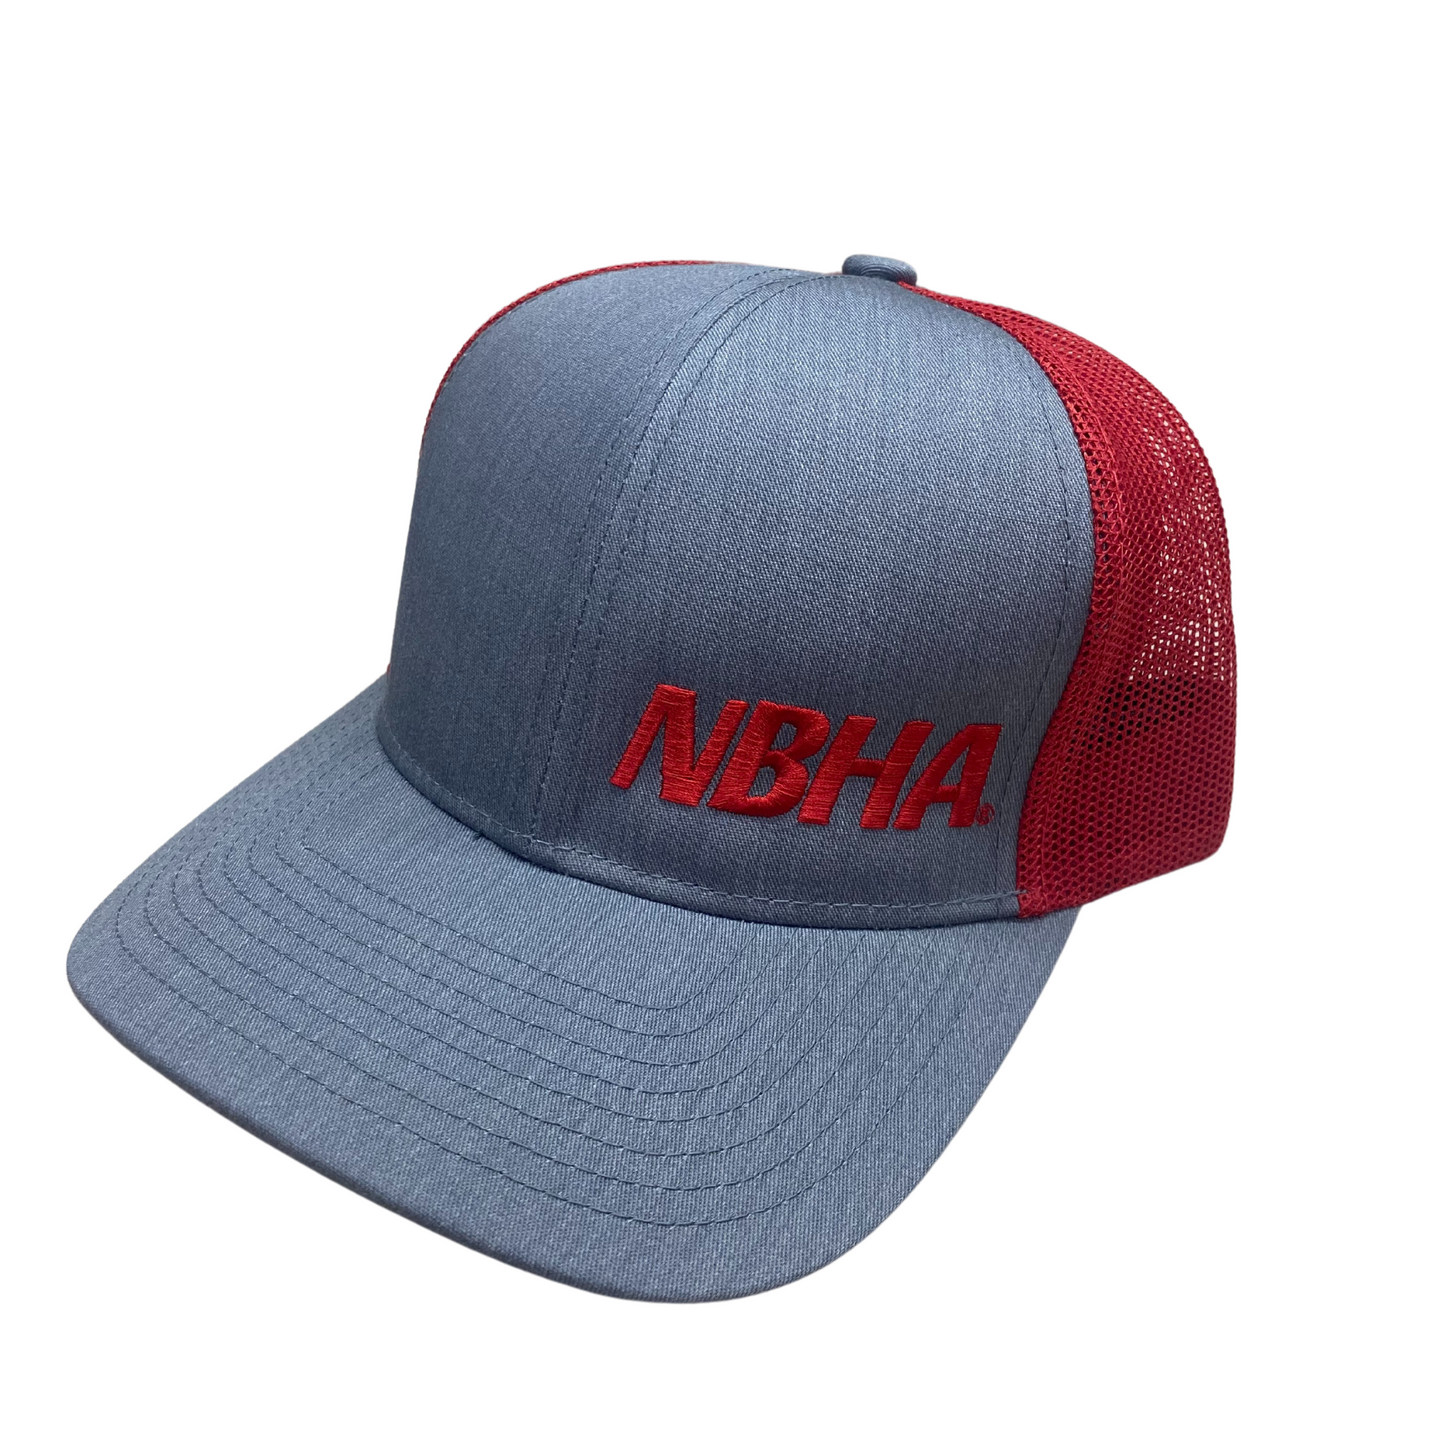 NBHA Trucker Hat : Grey/Red